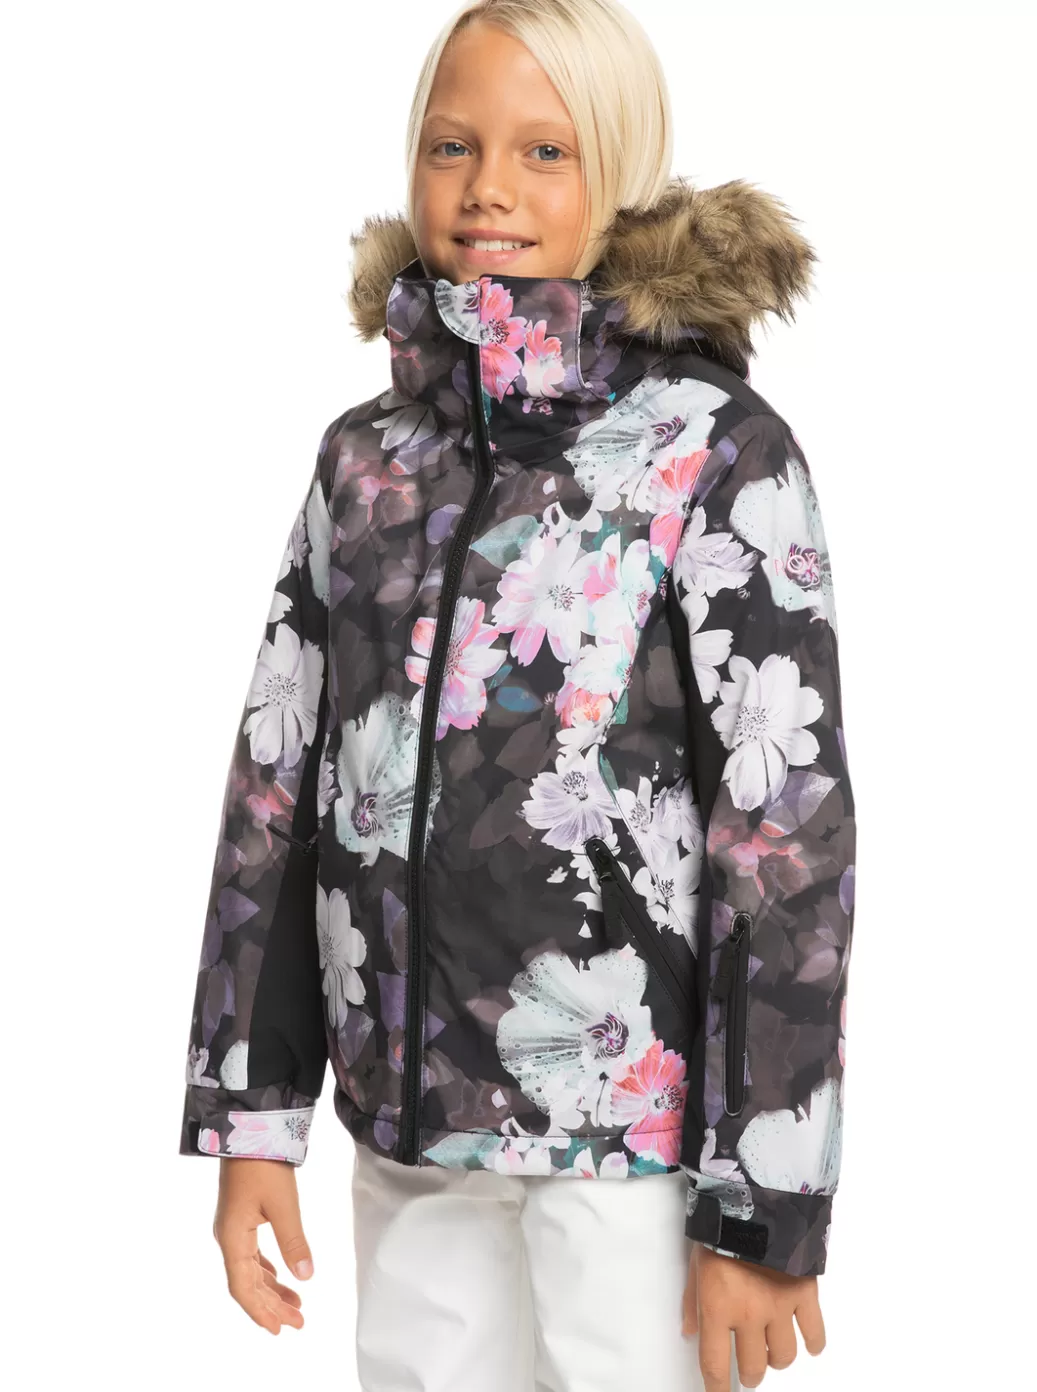 Snow Jackets | Girls Snow | KIDS | WOMEN ROXY Girl's 4-16 American Pie Technical Snow Jacket True Black Blurry Flower